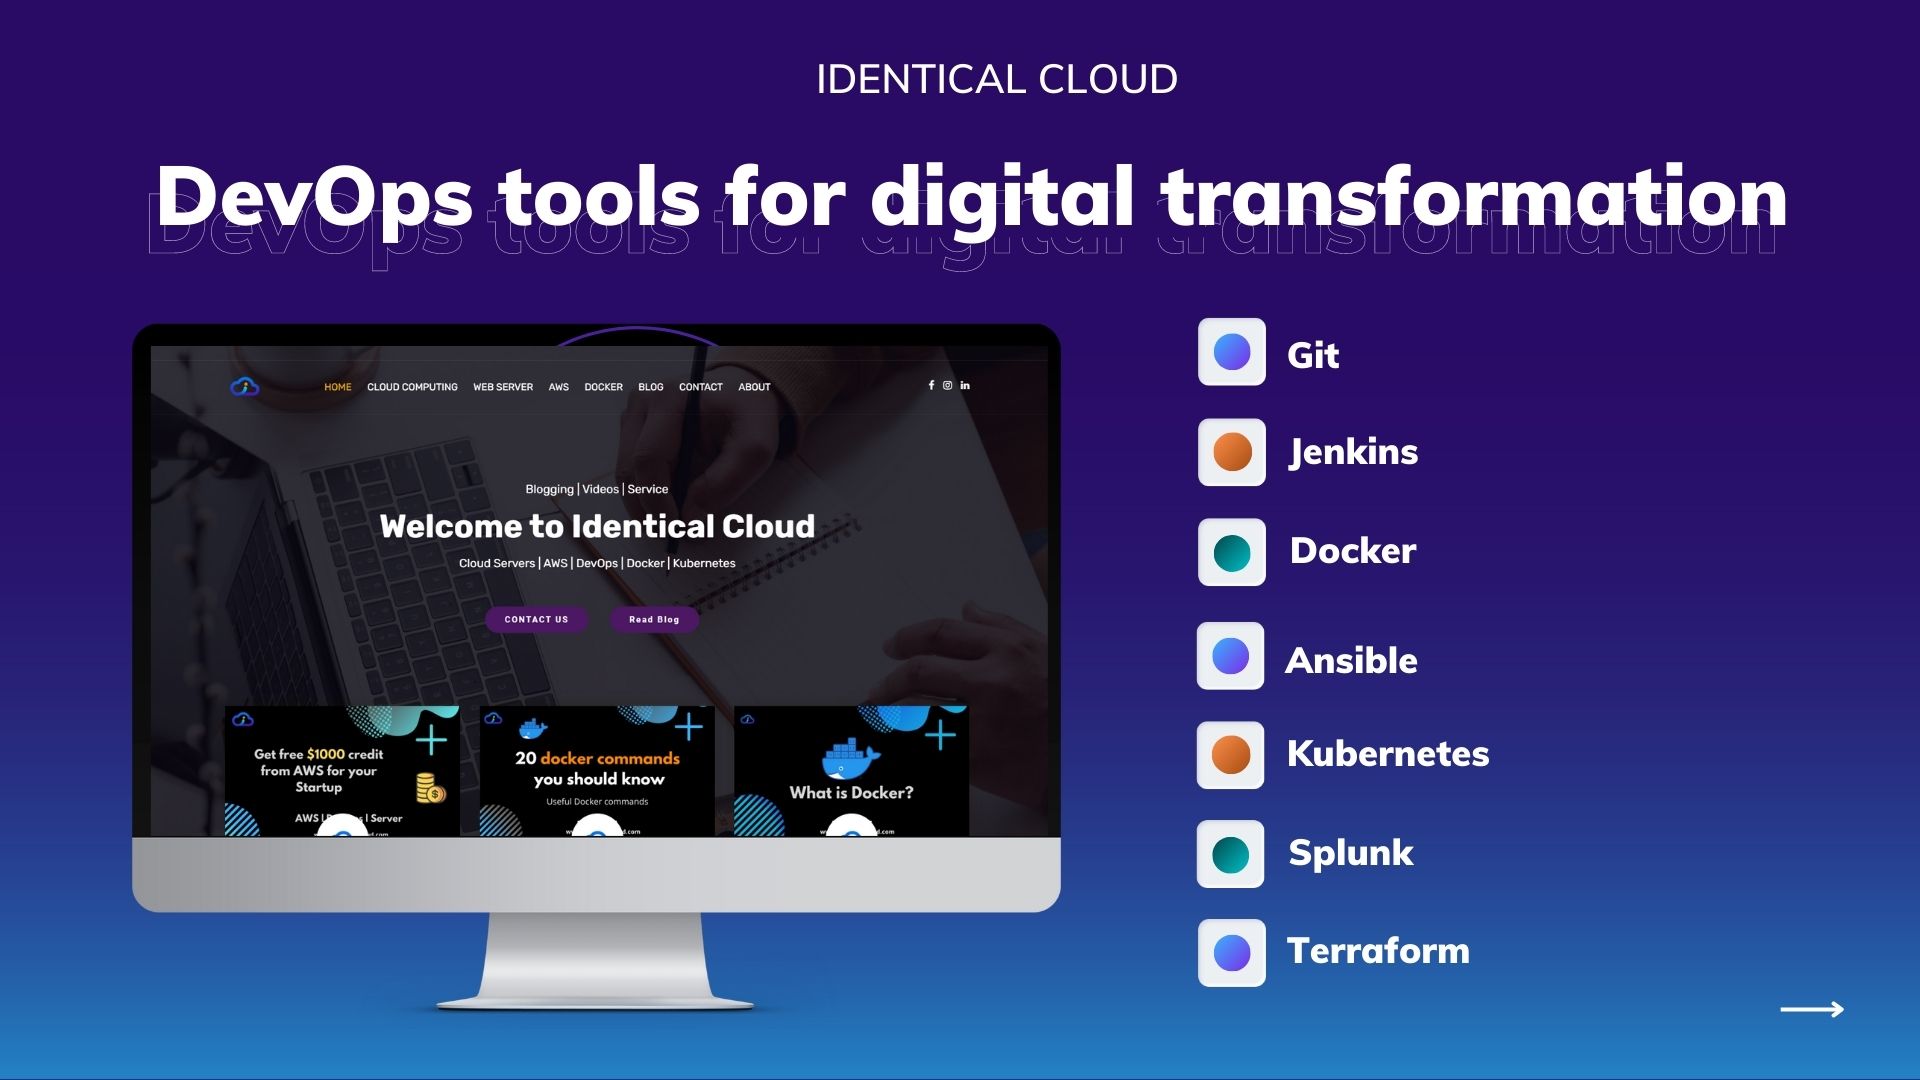 DevOps tools for digital transformation - identicalcloud.com